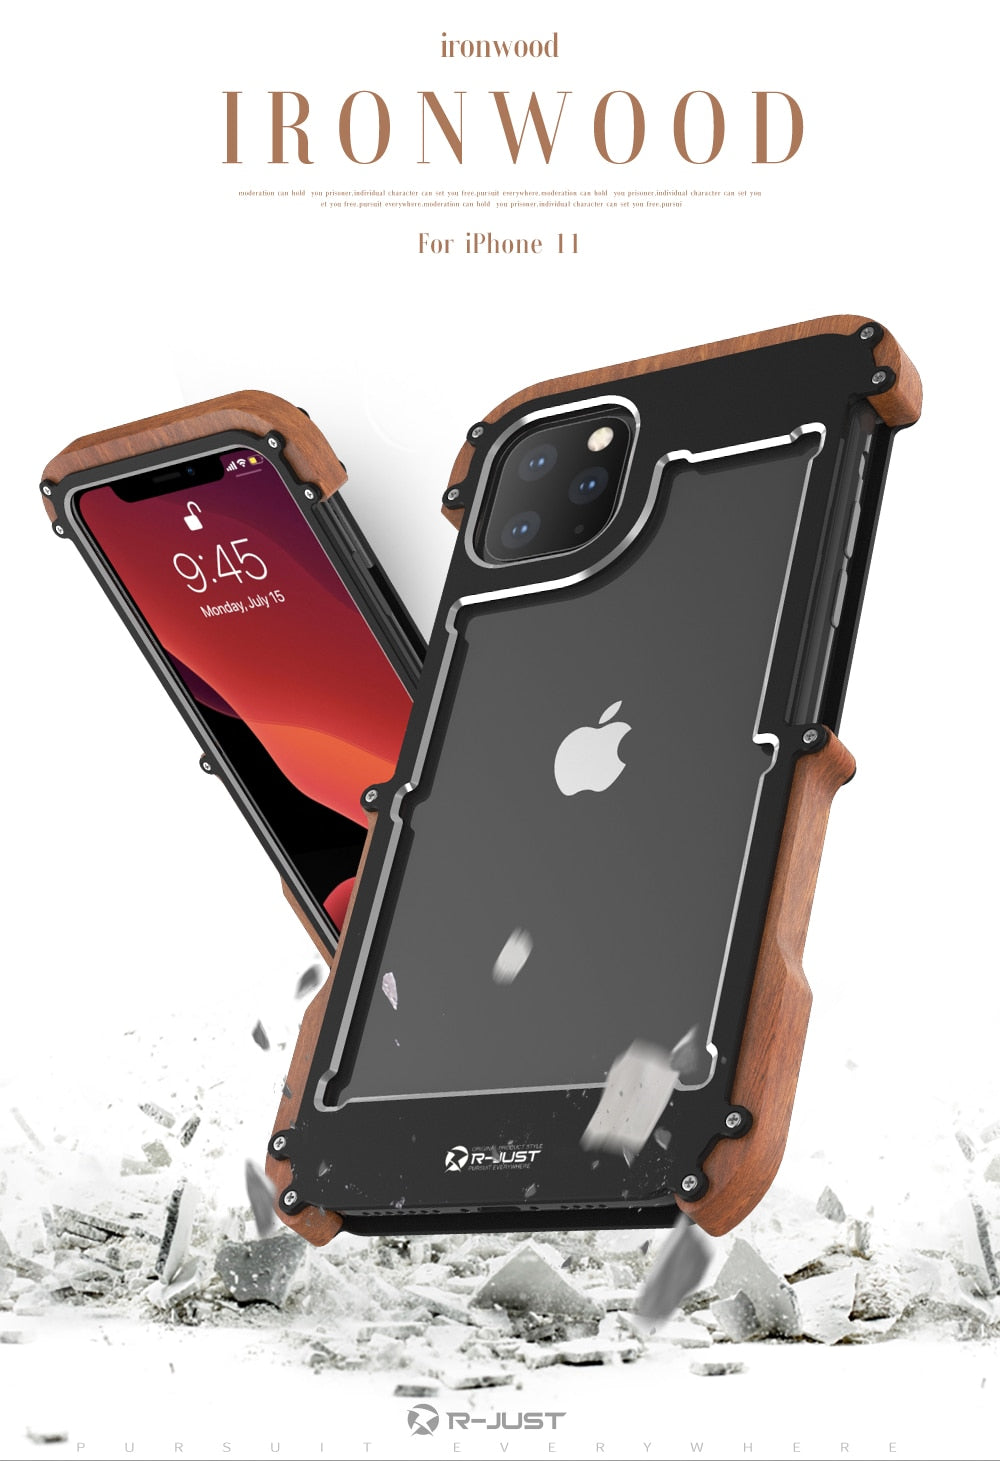 Hard Metal Aluminum Wood Phone Case for iPhone 11 Pro Max - carolay.co phone case shop